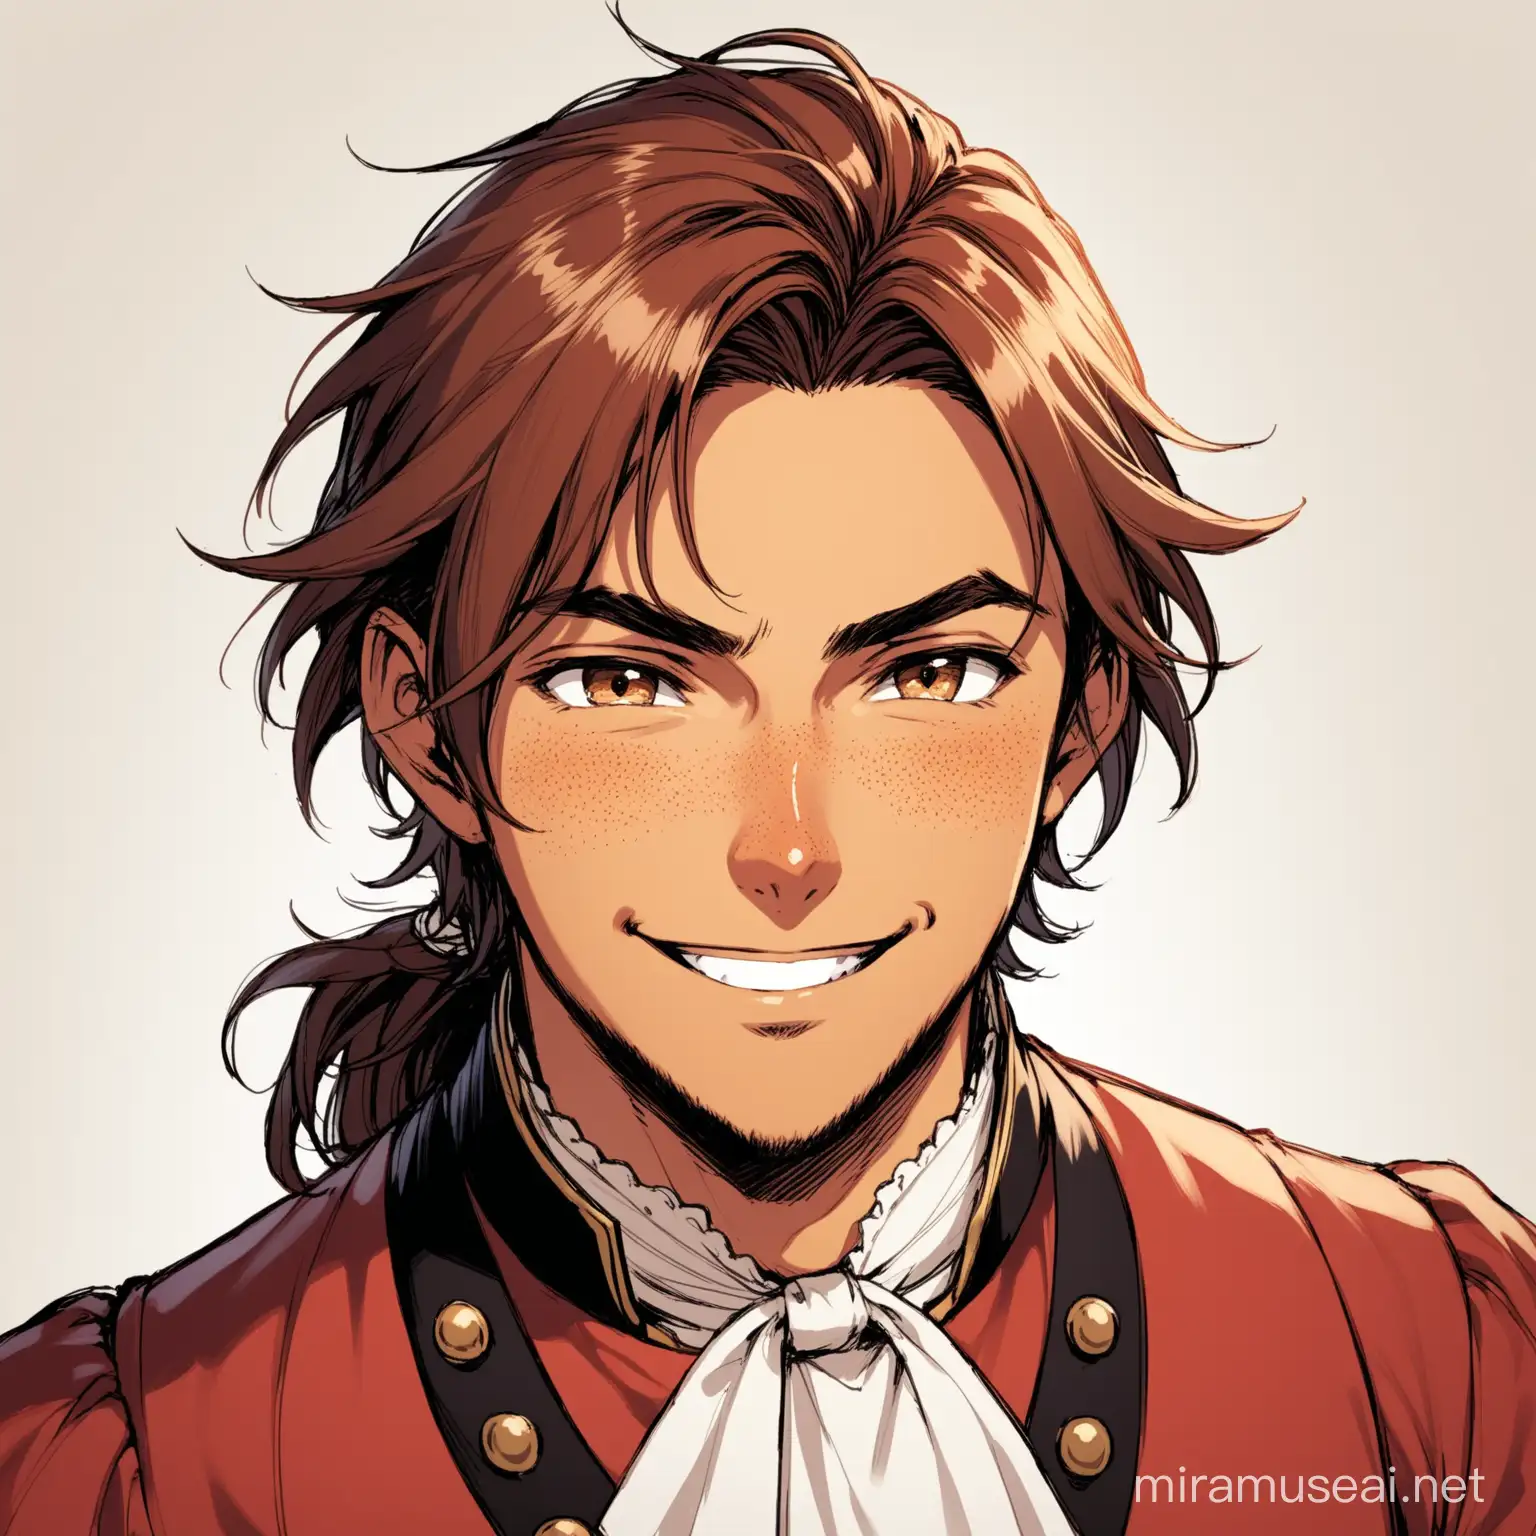 Mischievous 19th Century Nobleman with Reddish Brown Hair on White Background